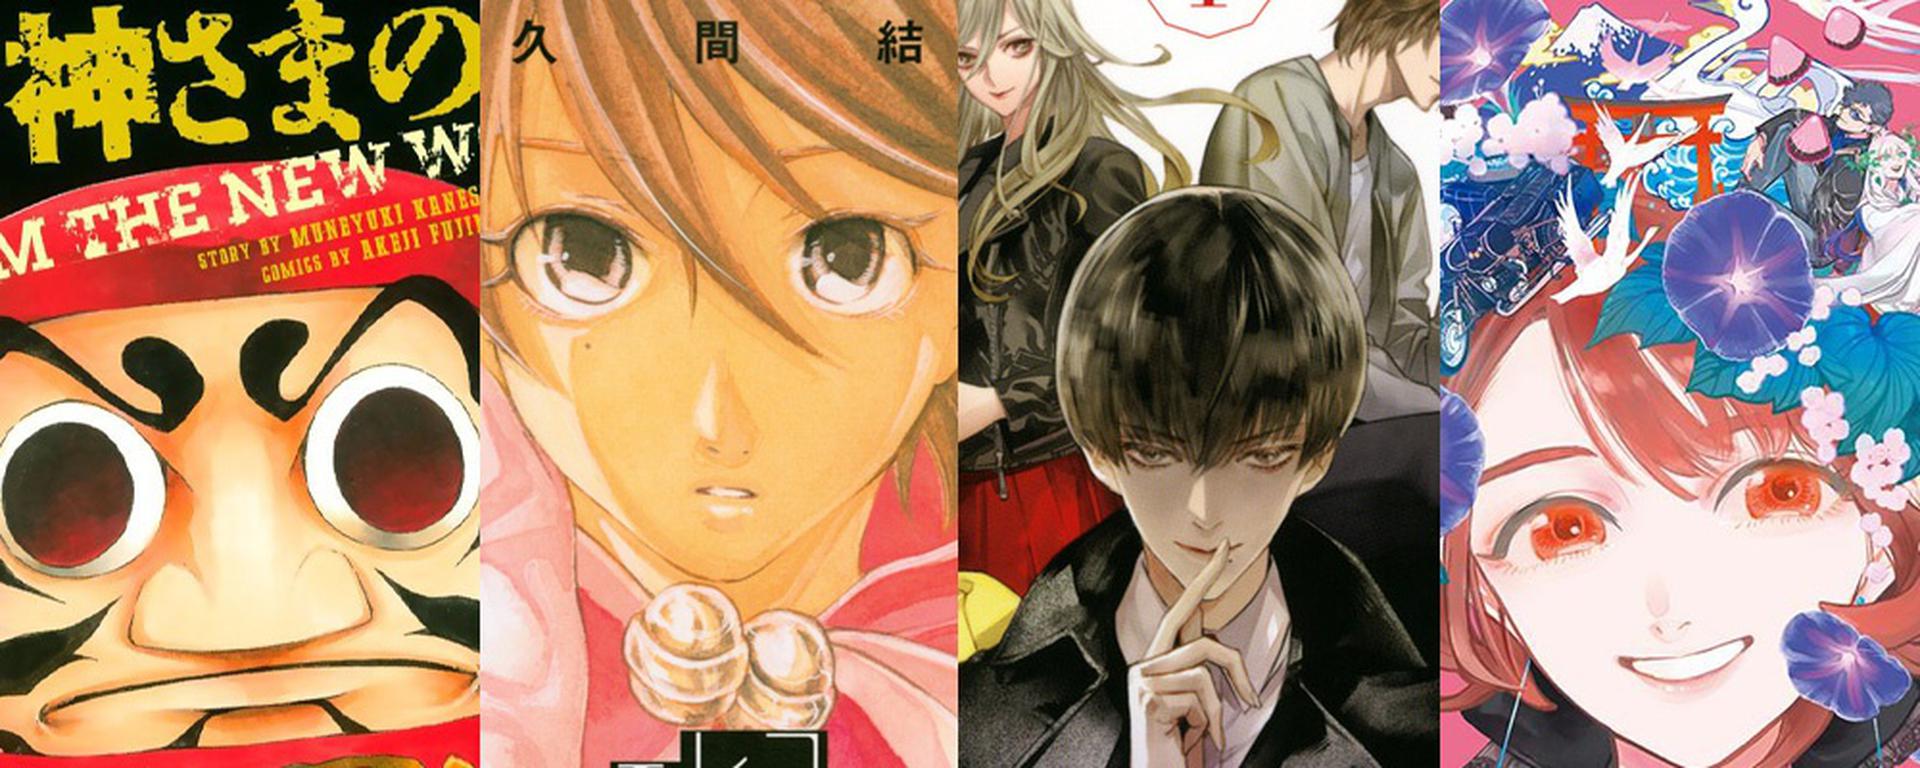 Atención otakus: “Shikimori”, “Love in focus”, “Joy” entre otros mangas llegan al Perú por “Distrito Manga”